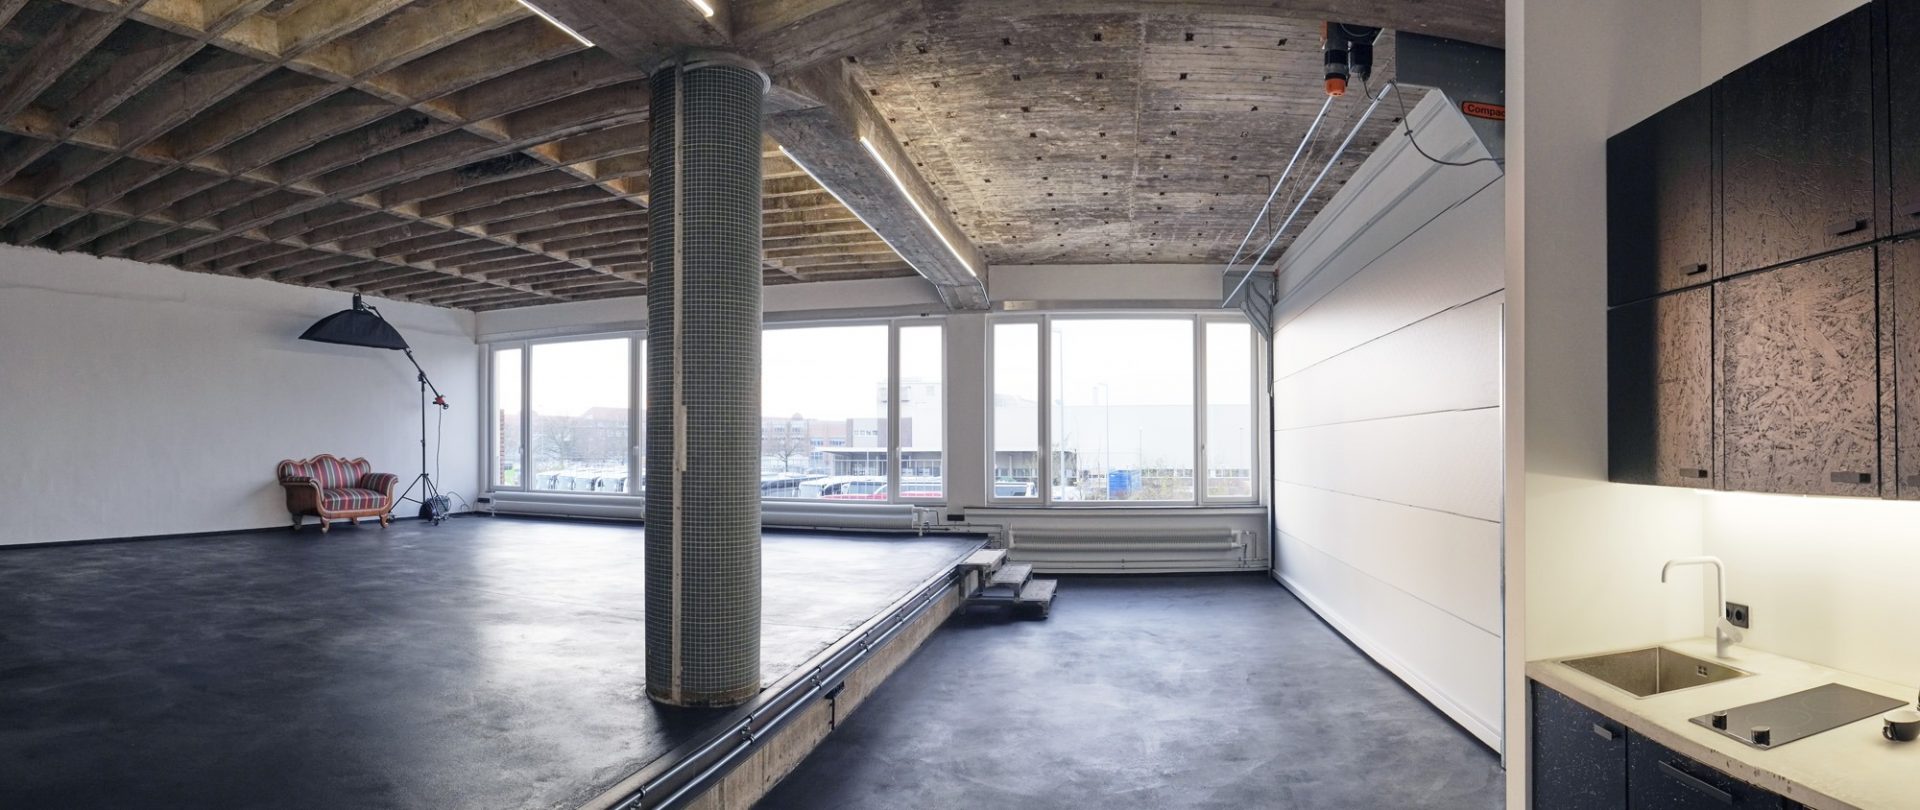 Raw studios Berlin nutzt das Compact Hebefalttor als Trennwand